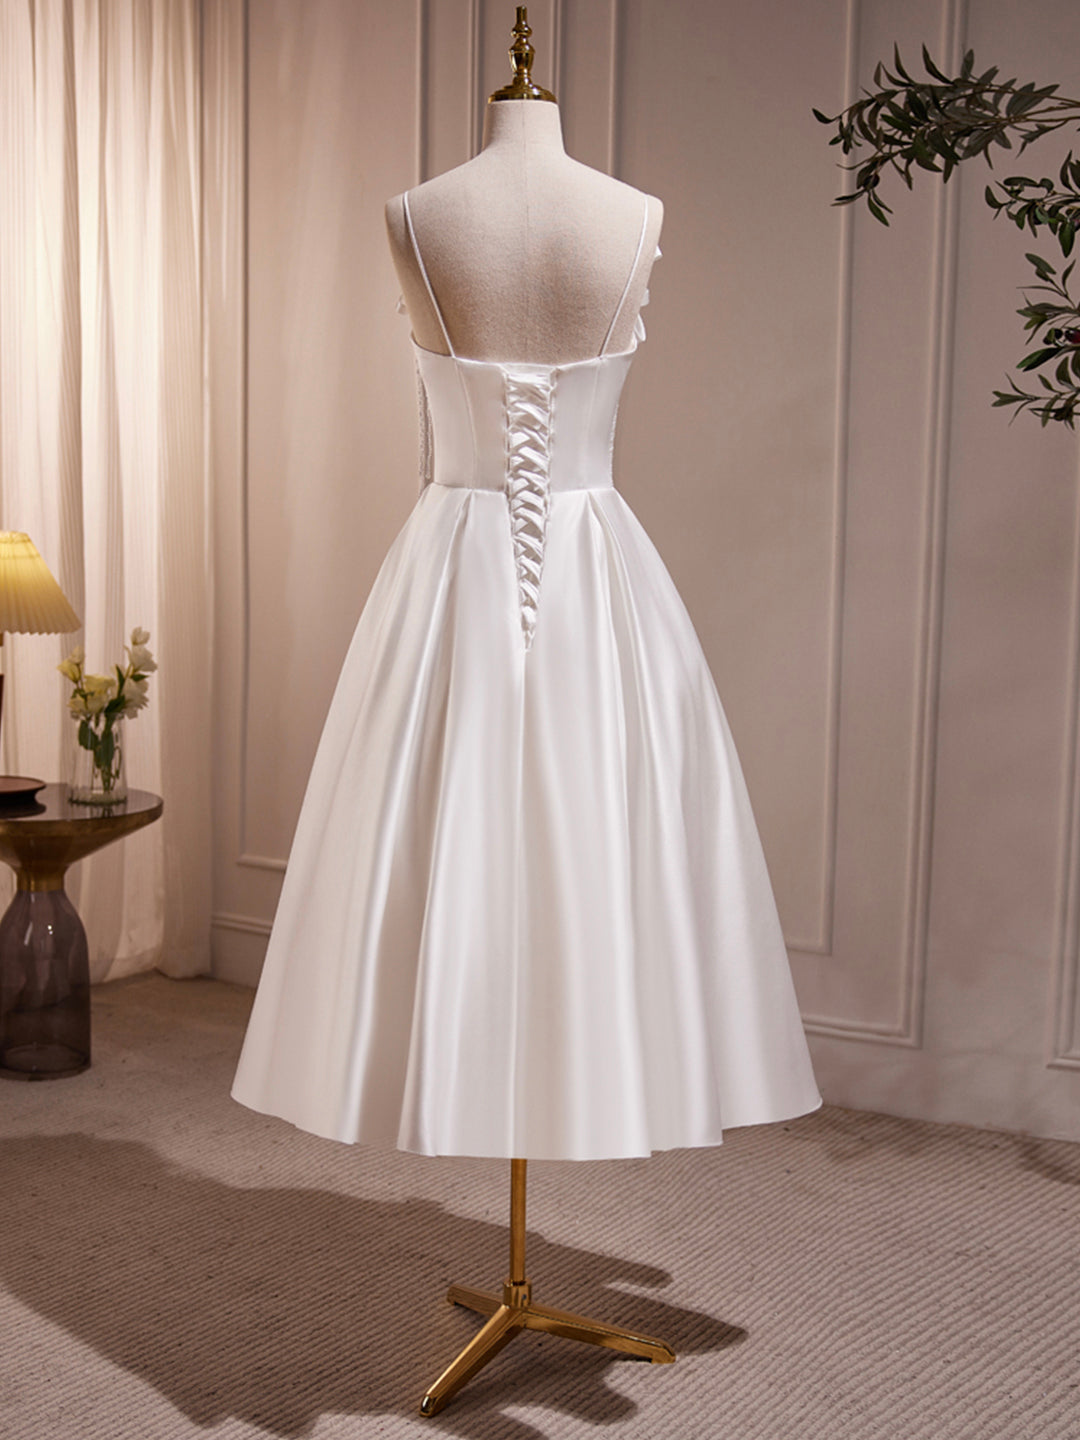 Prom Dress 12, White Spaghetti Strap Satin Short Prom Dress, White V-Neck Evening Party Dress